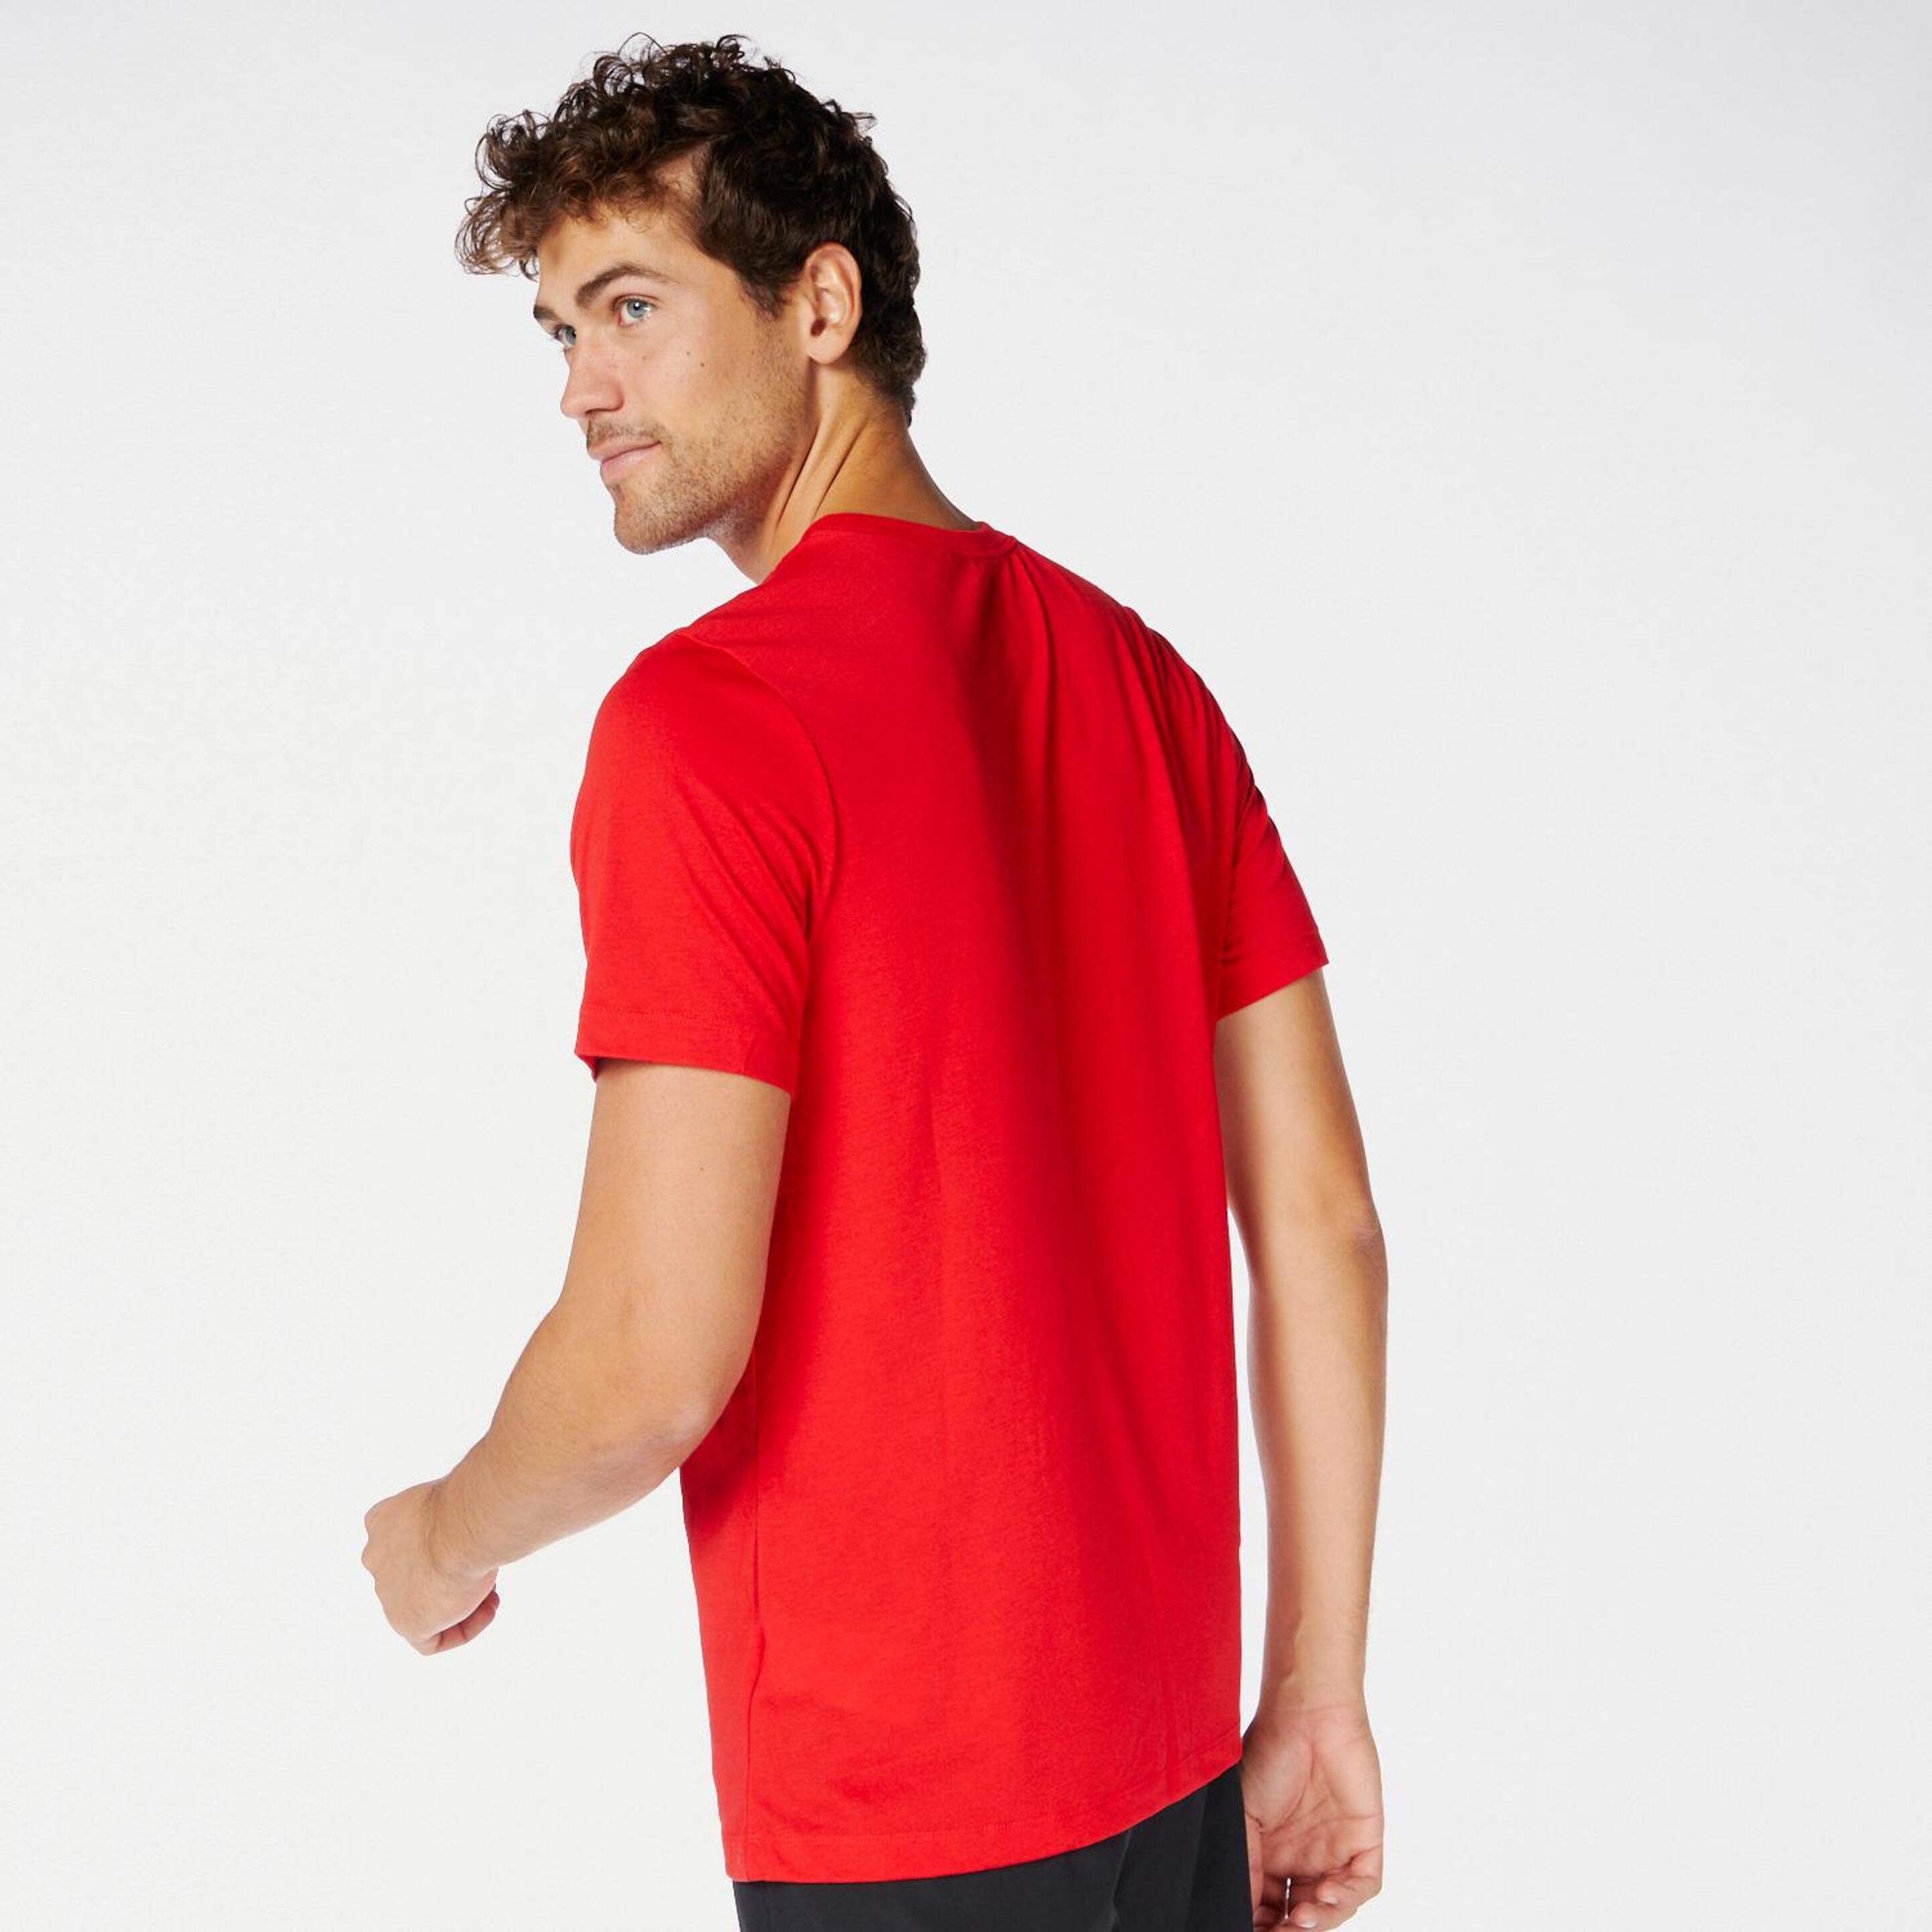 Nike Pro Dri-FIT - Rojo - Camiseta Running Hombre